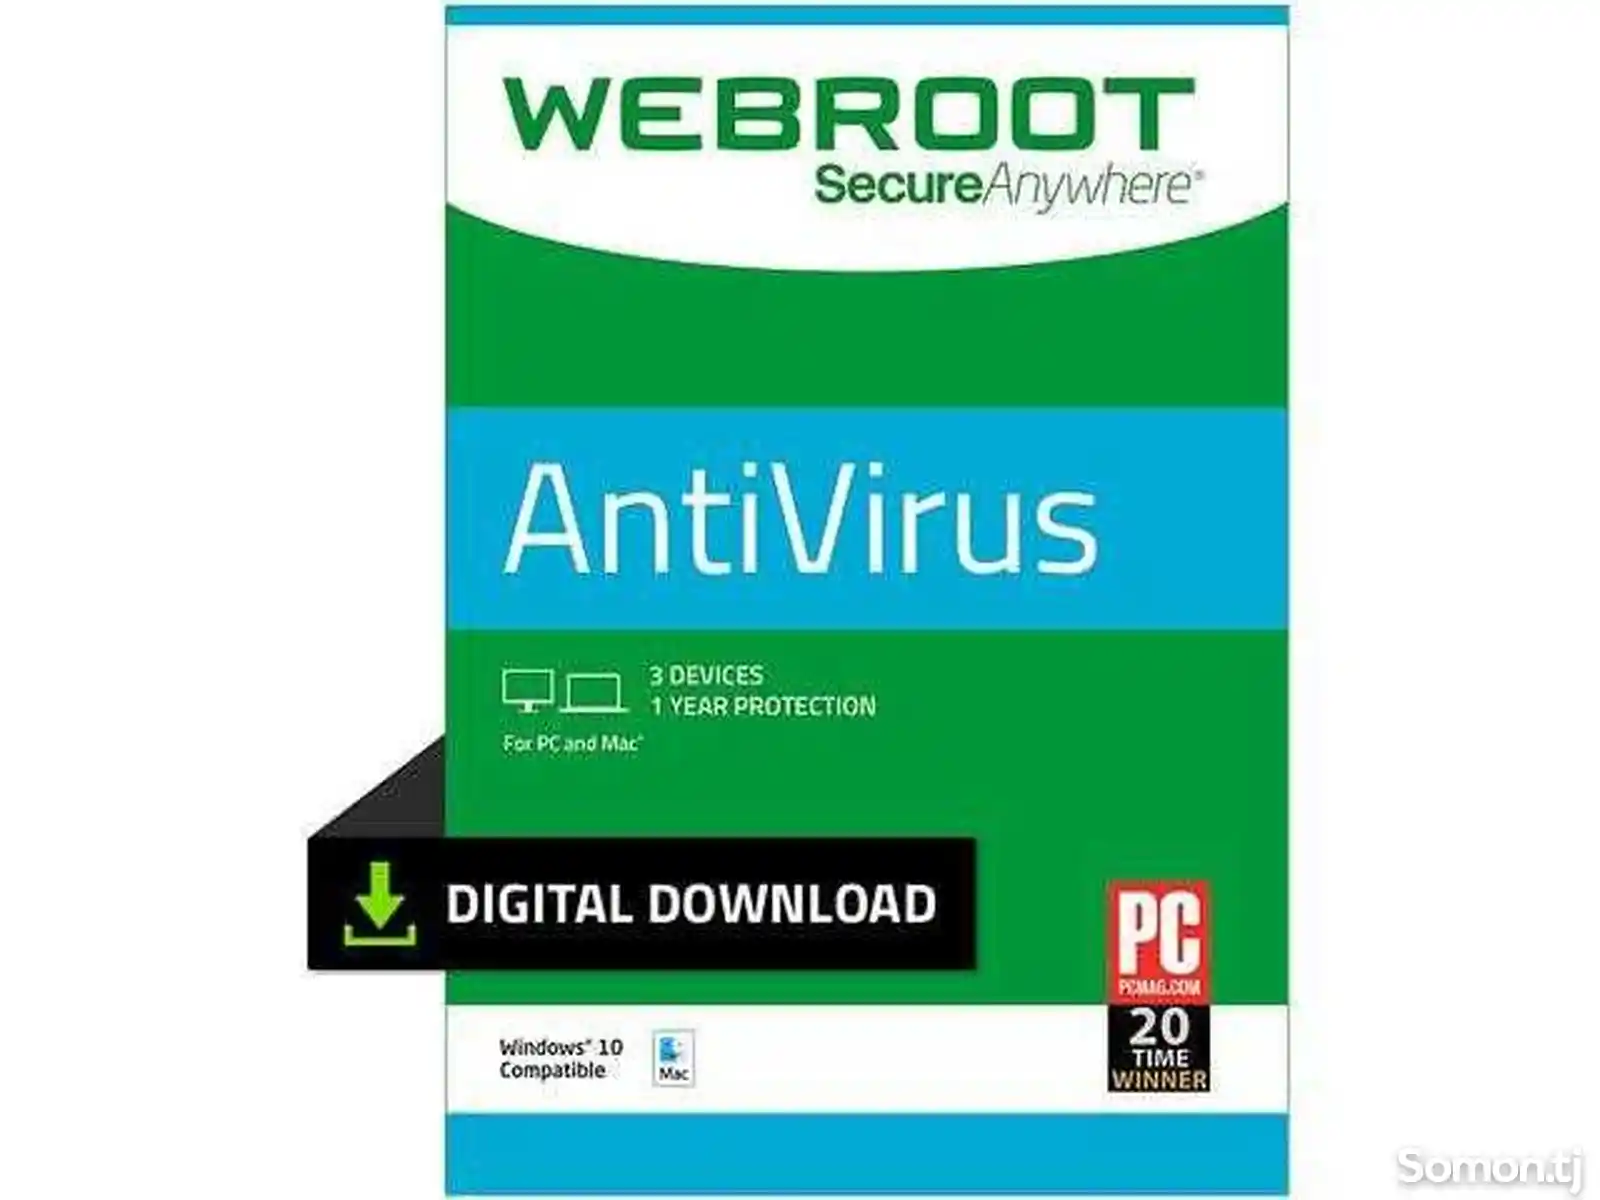 Webroot SecureAnywhere AntiVirus - иҷозатнома барои 1 роёна, 1 сол-1